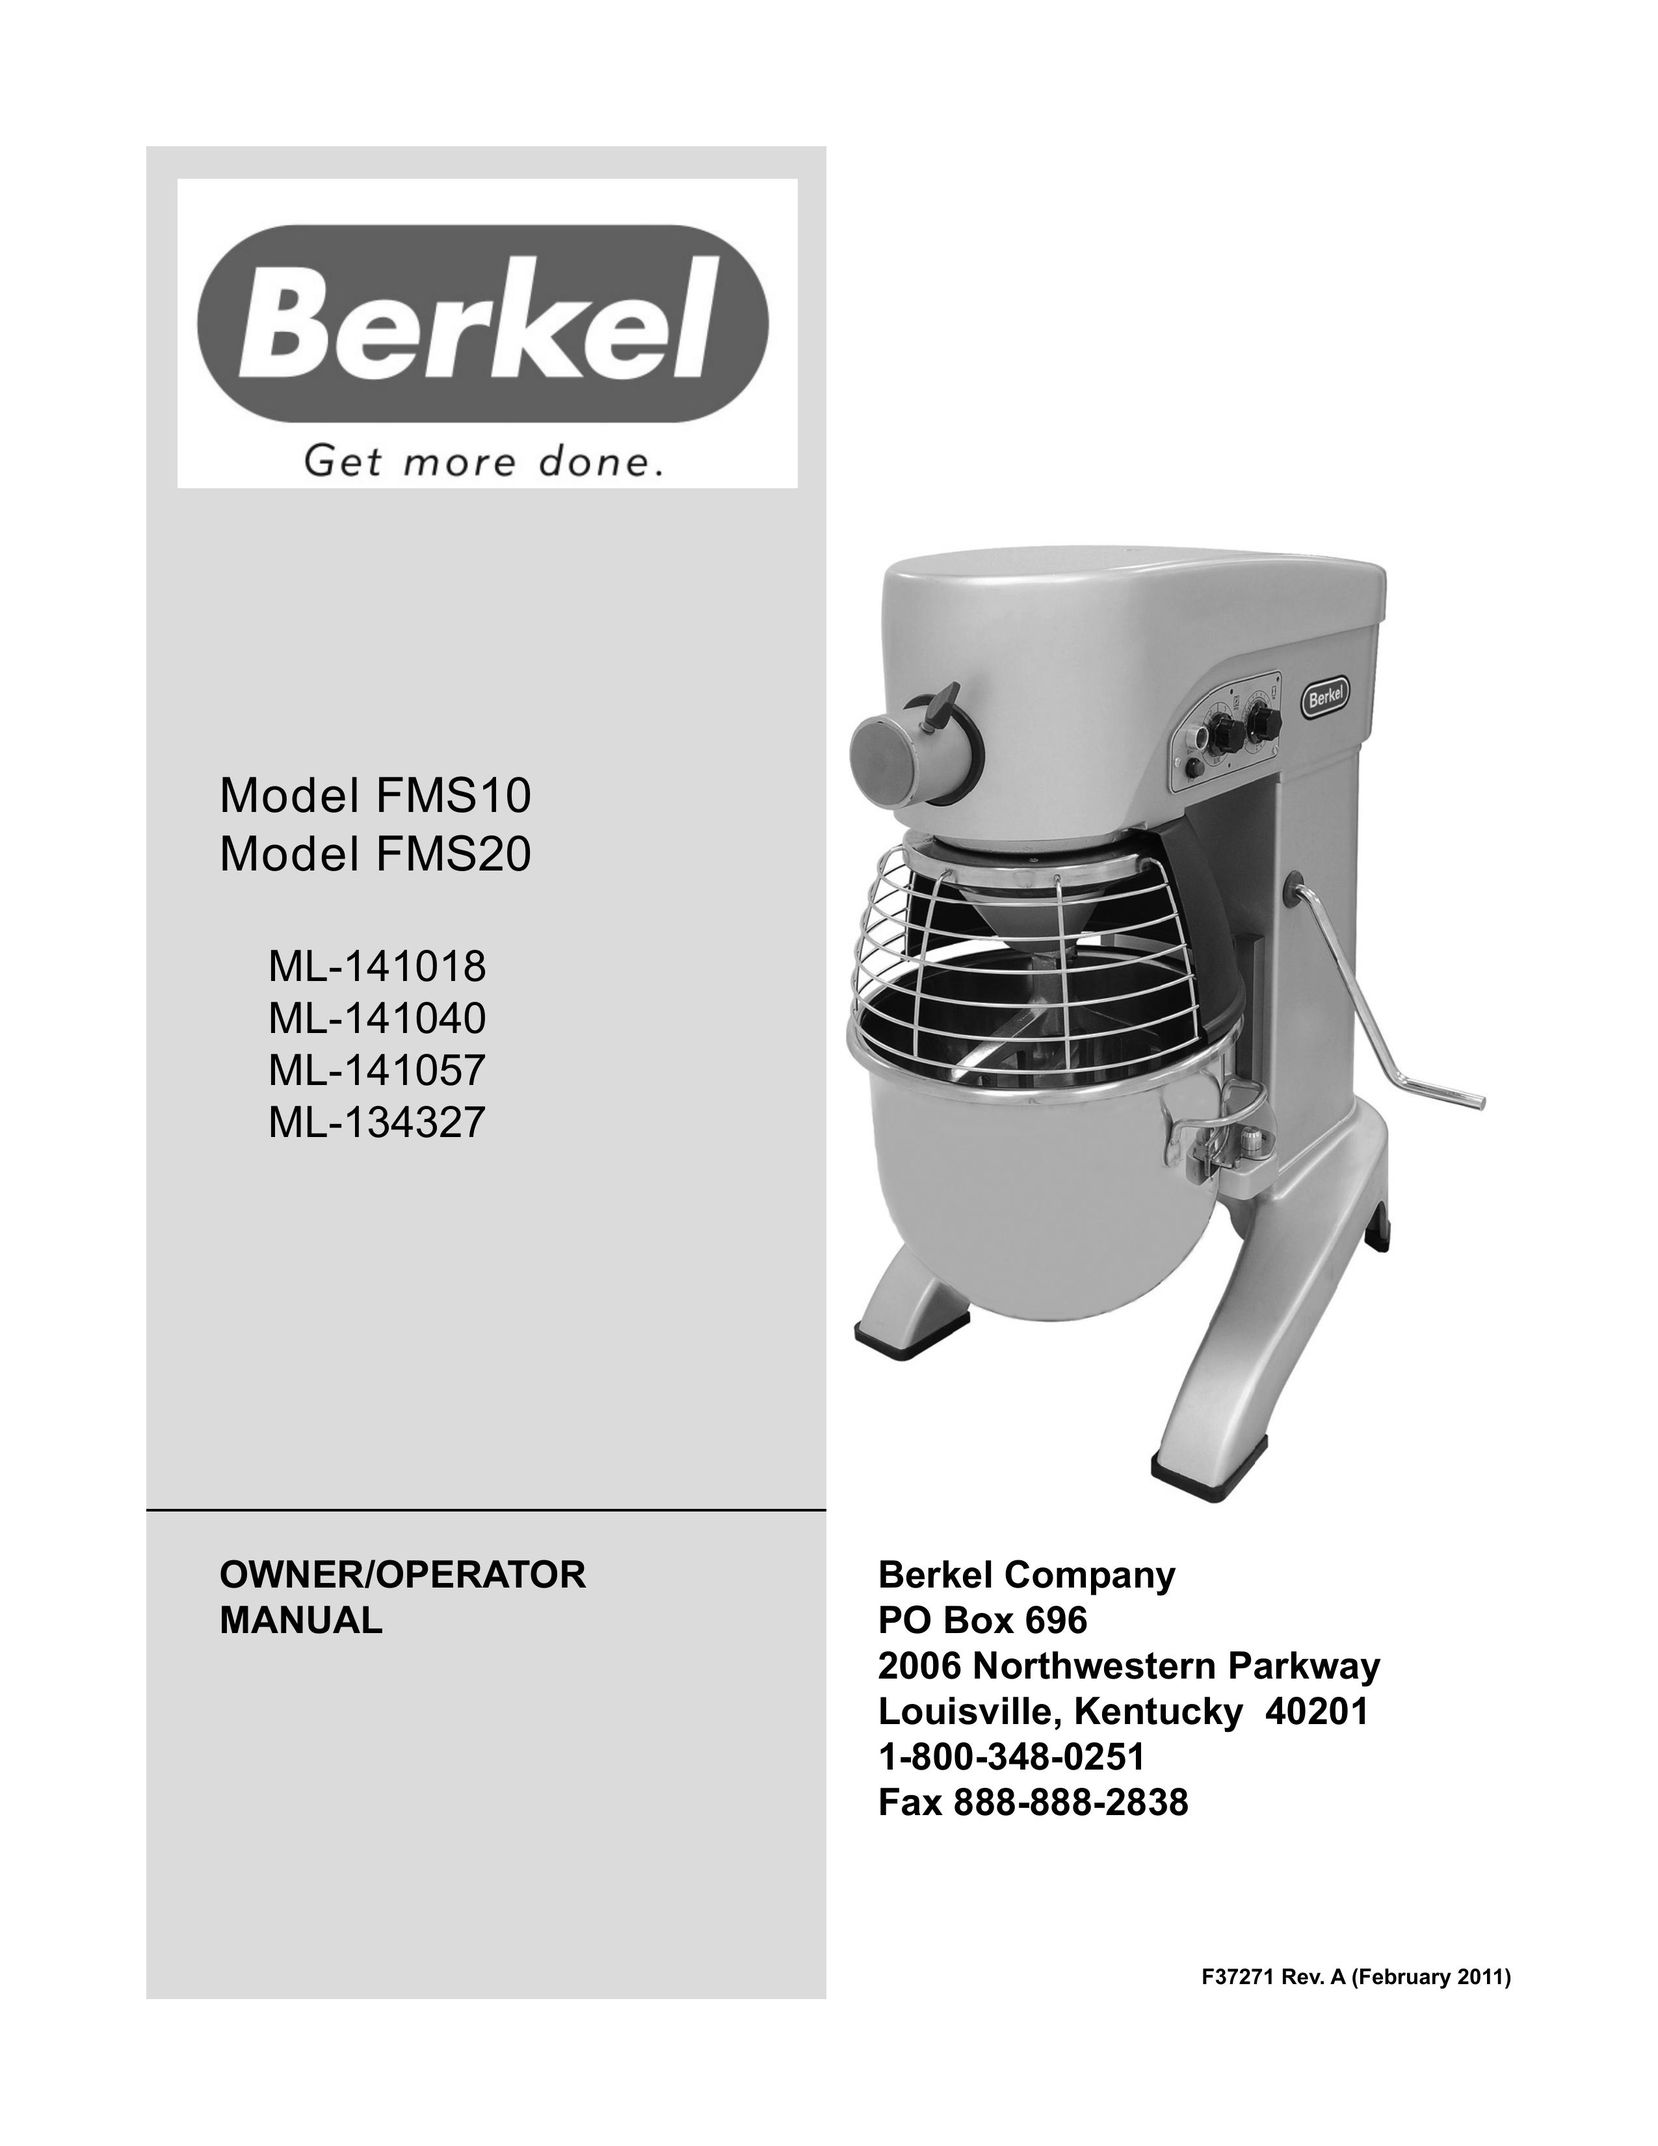 Berkel ML-141018 Mixer User Manual